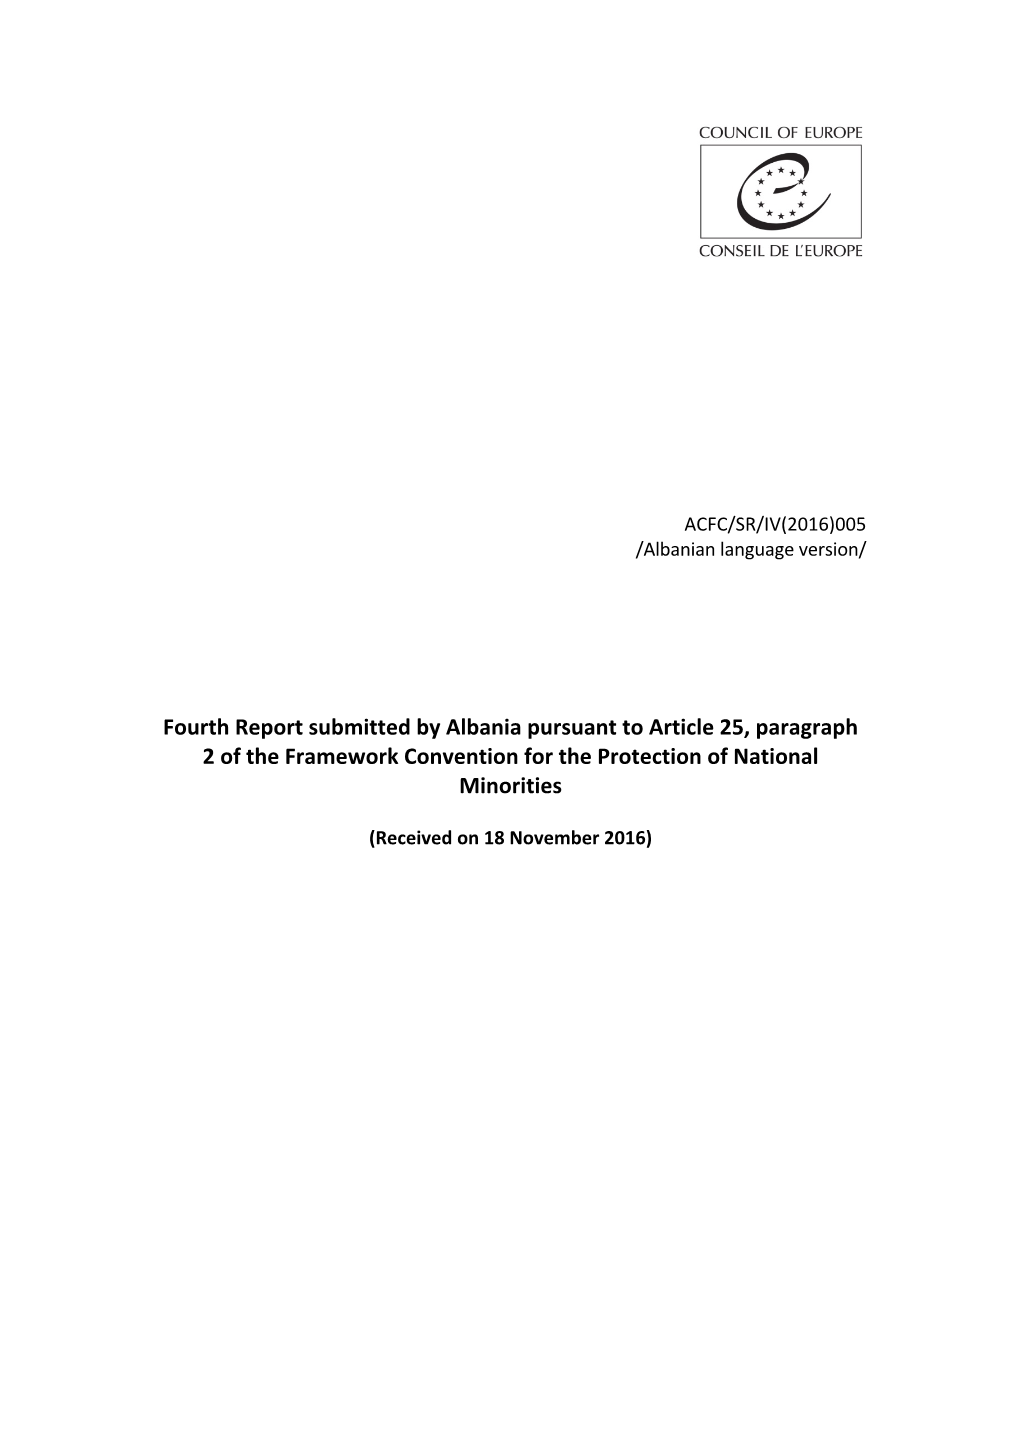 ACFC/SR/IV(2016)005 /Albanian Language Version